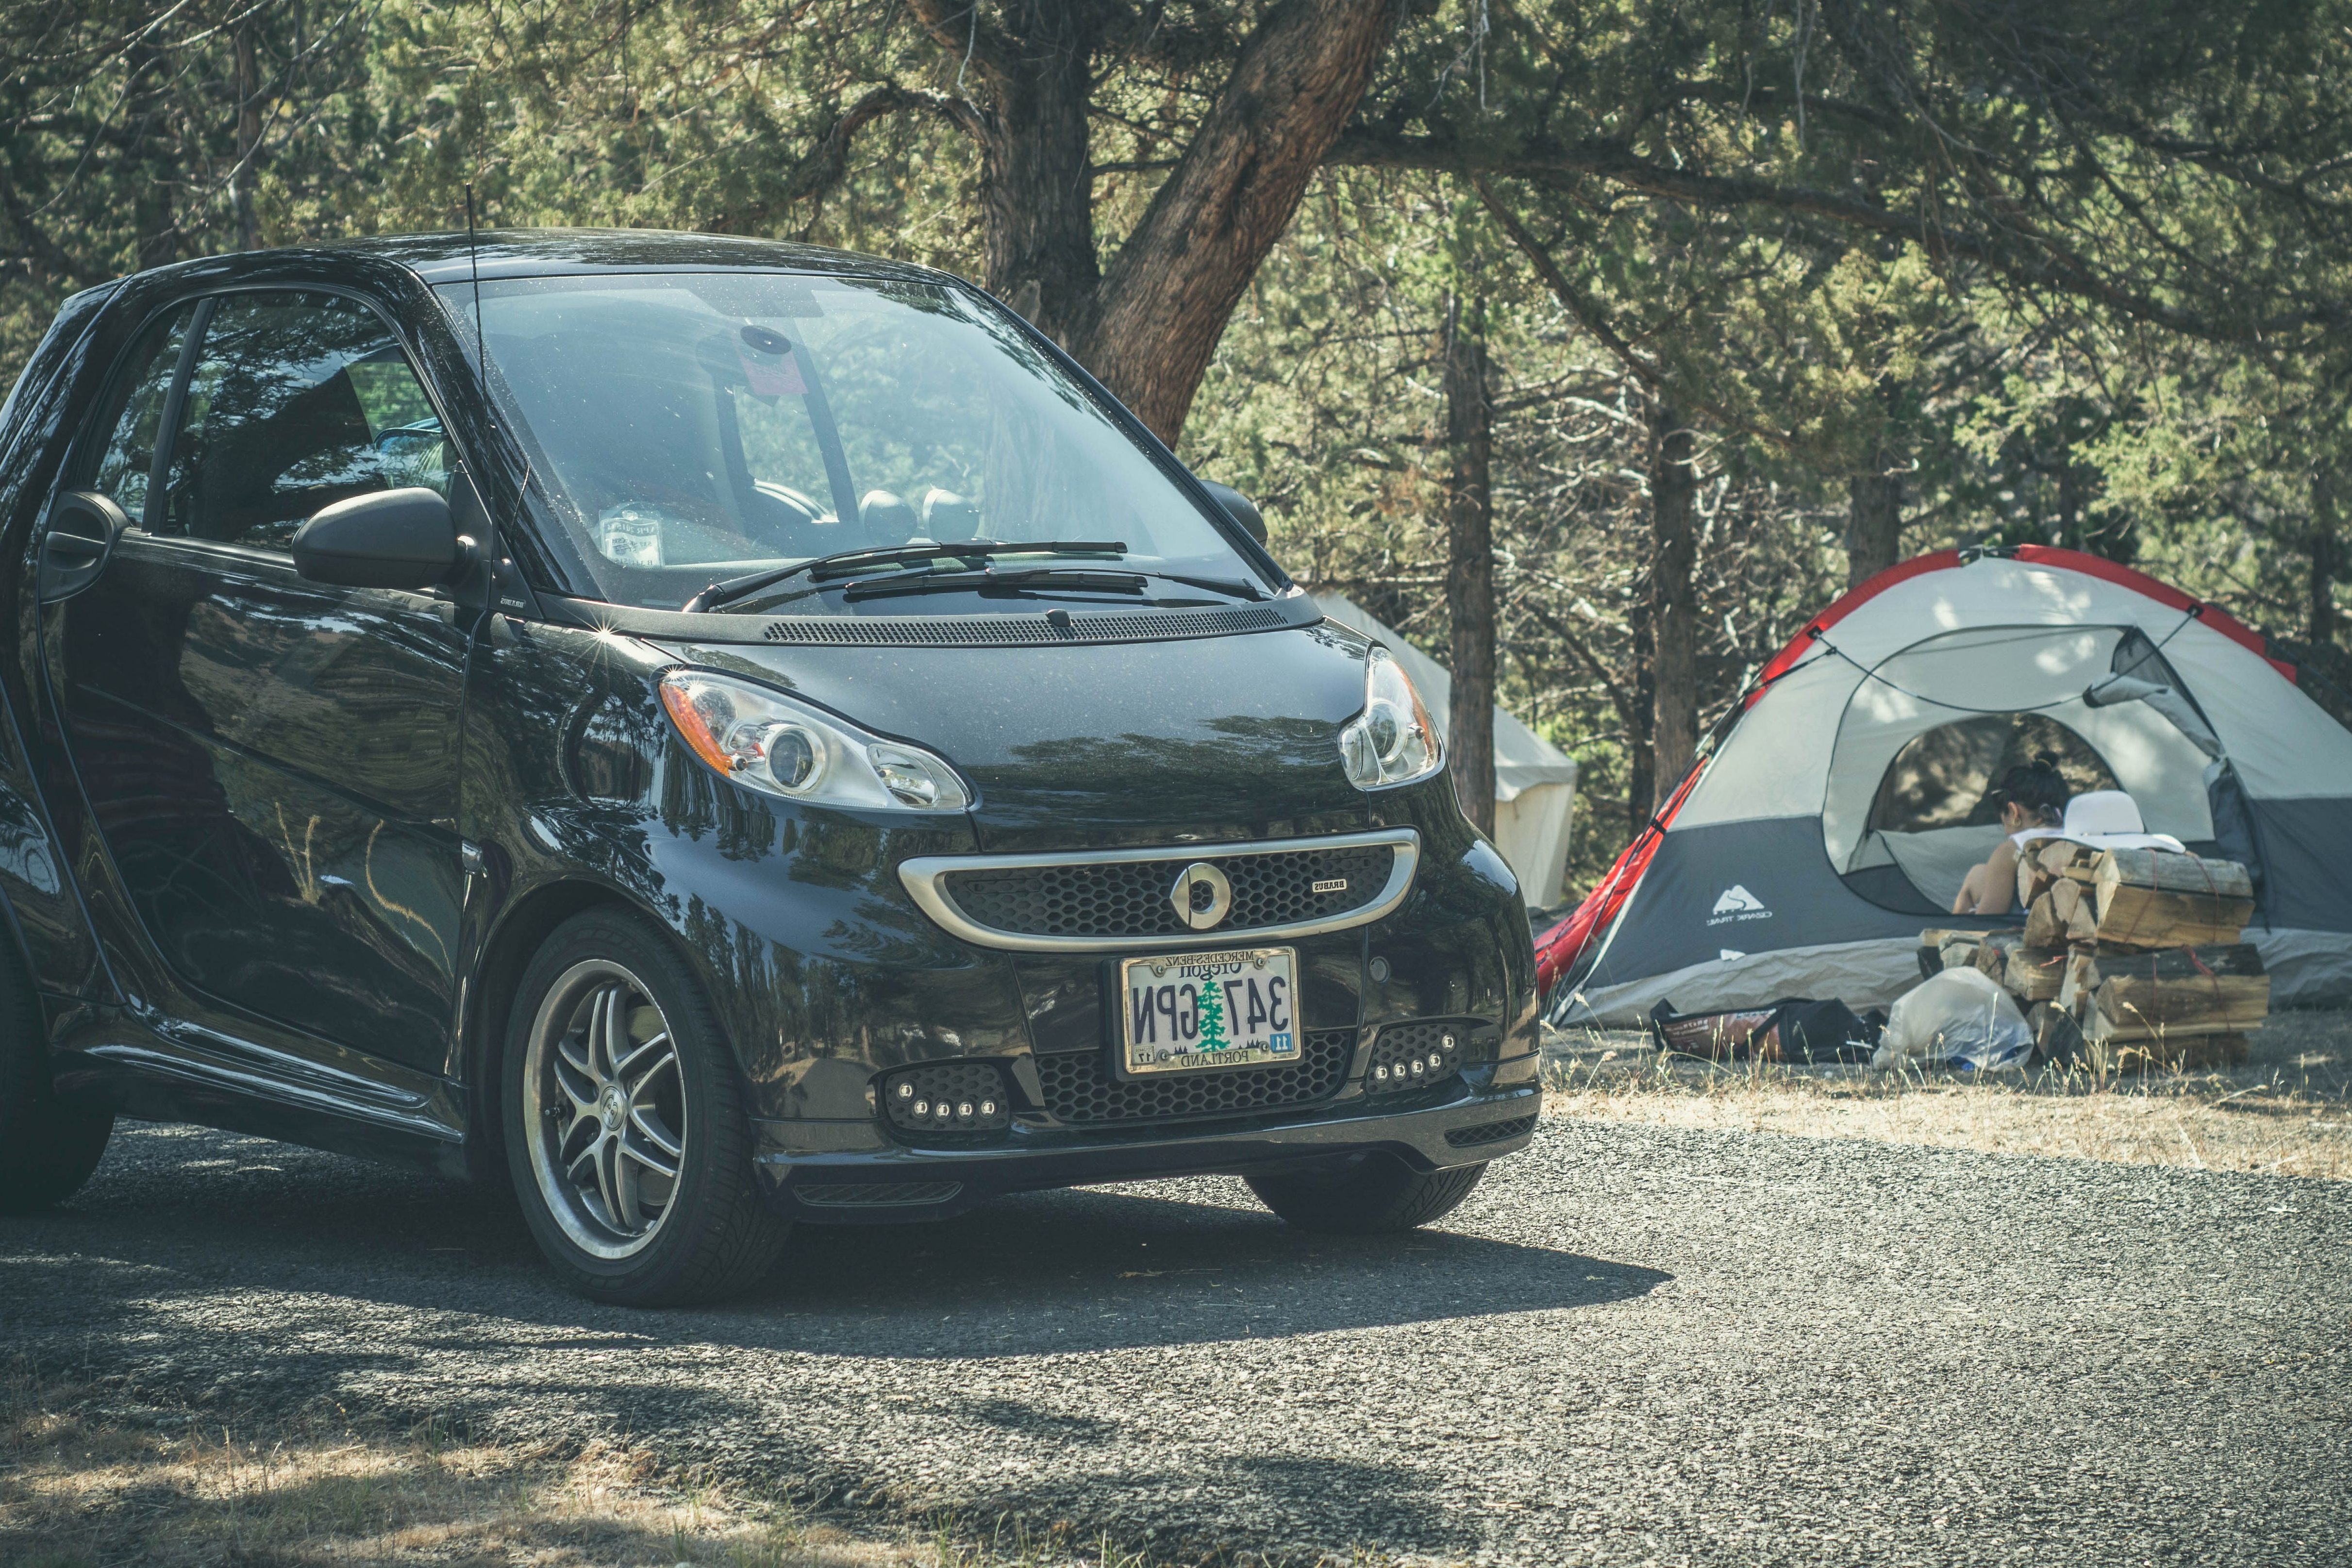 Машина дол. Cars Camping Forest. Camping car. Грейдволд дол автомобиль. Лагерь машина.